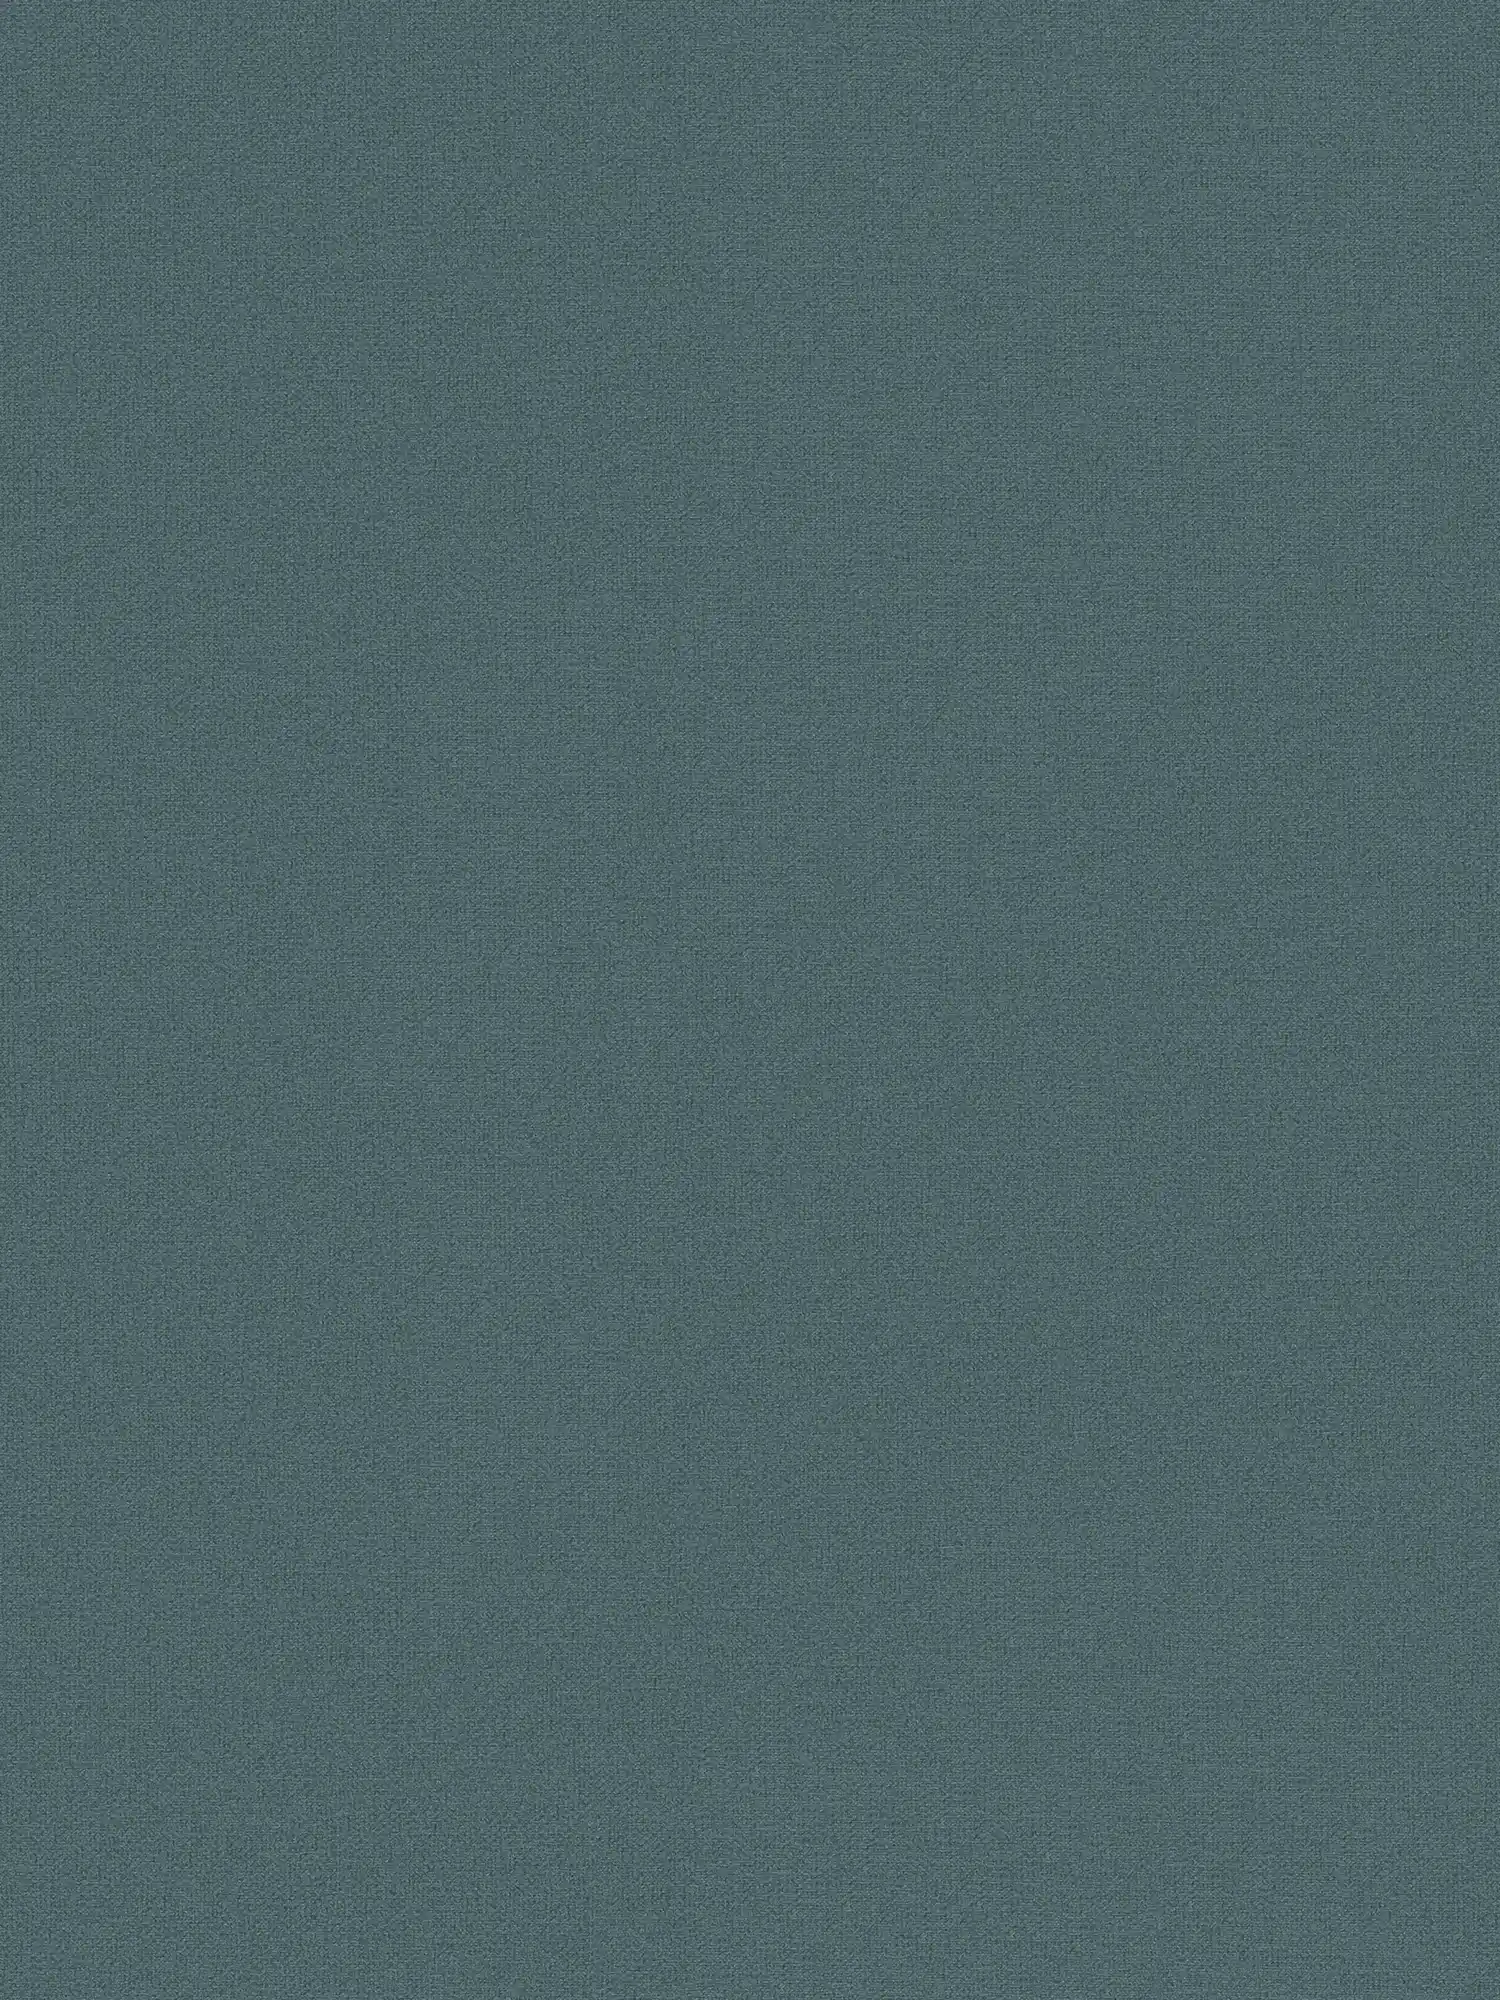 Papel pintado no tejido liso con aspecto de lino Sin PVC - Azul, Gris
